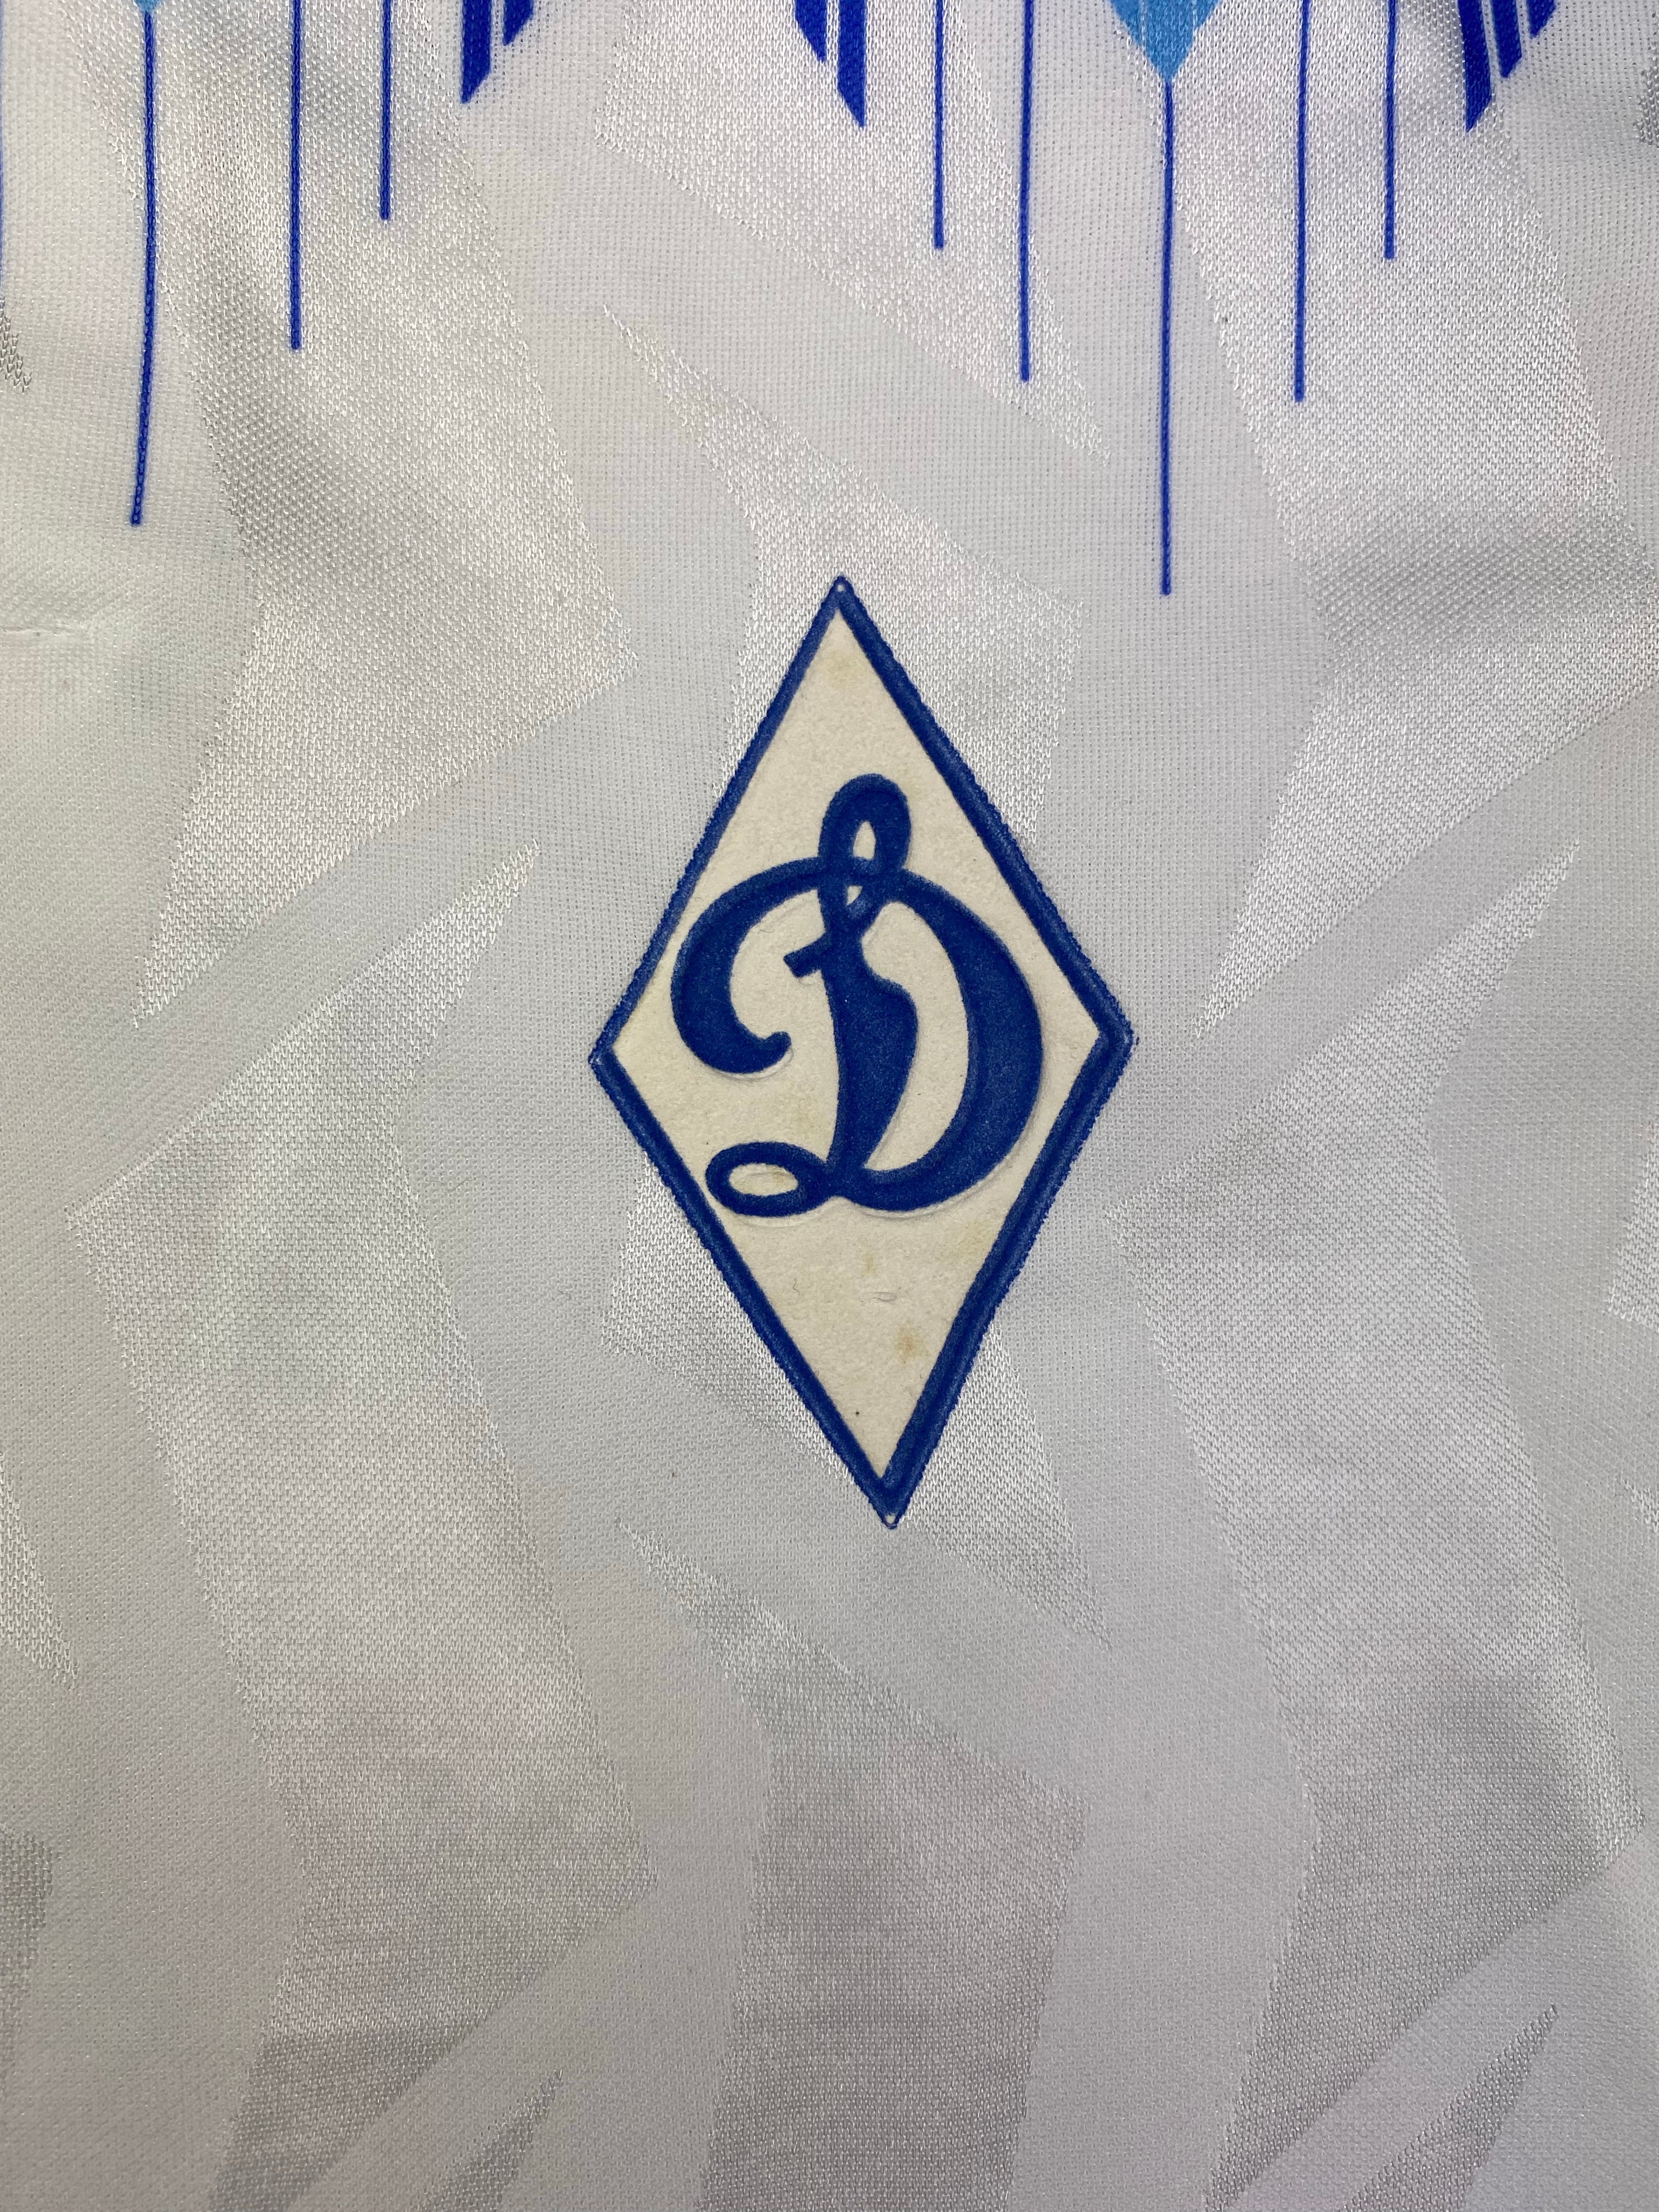 1990/93 Dynamo Moscow Away Shirt (L.Boys) 8.5/10